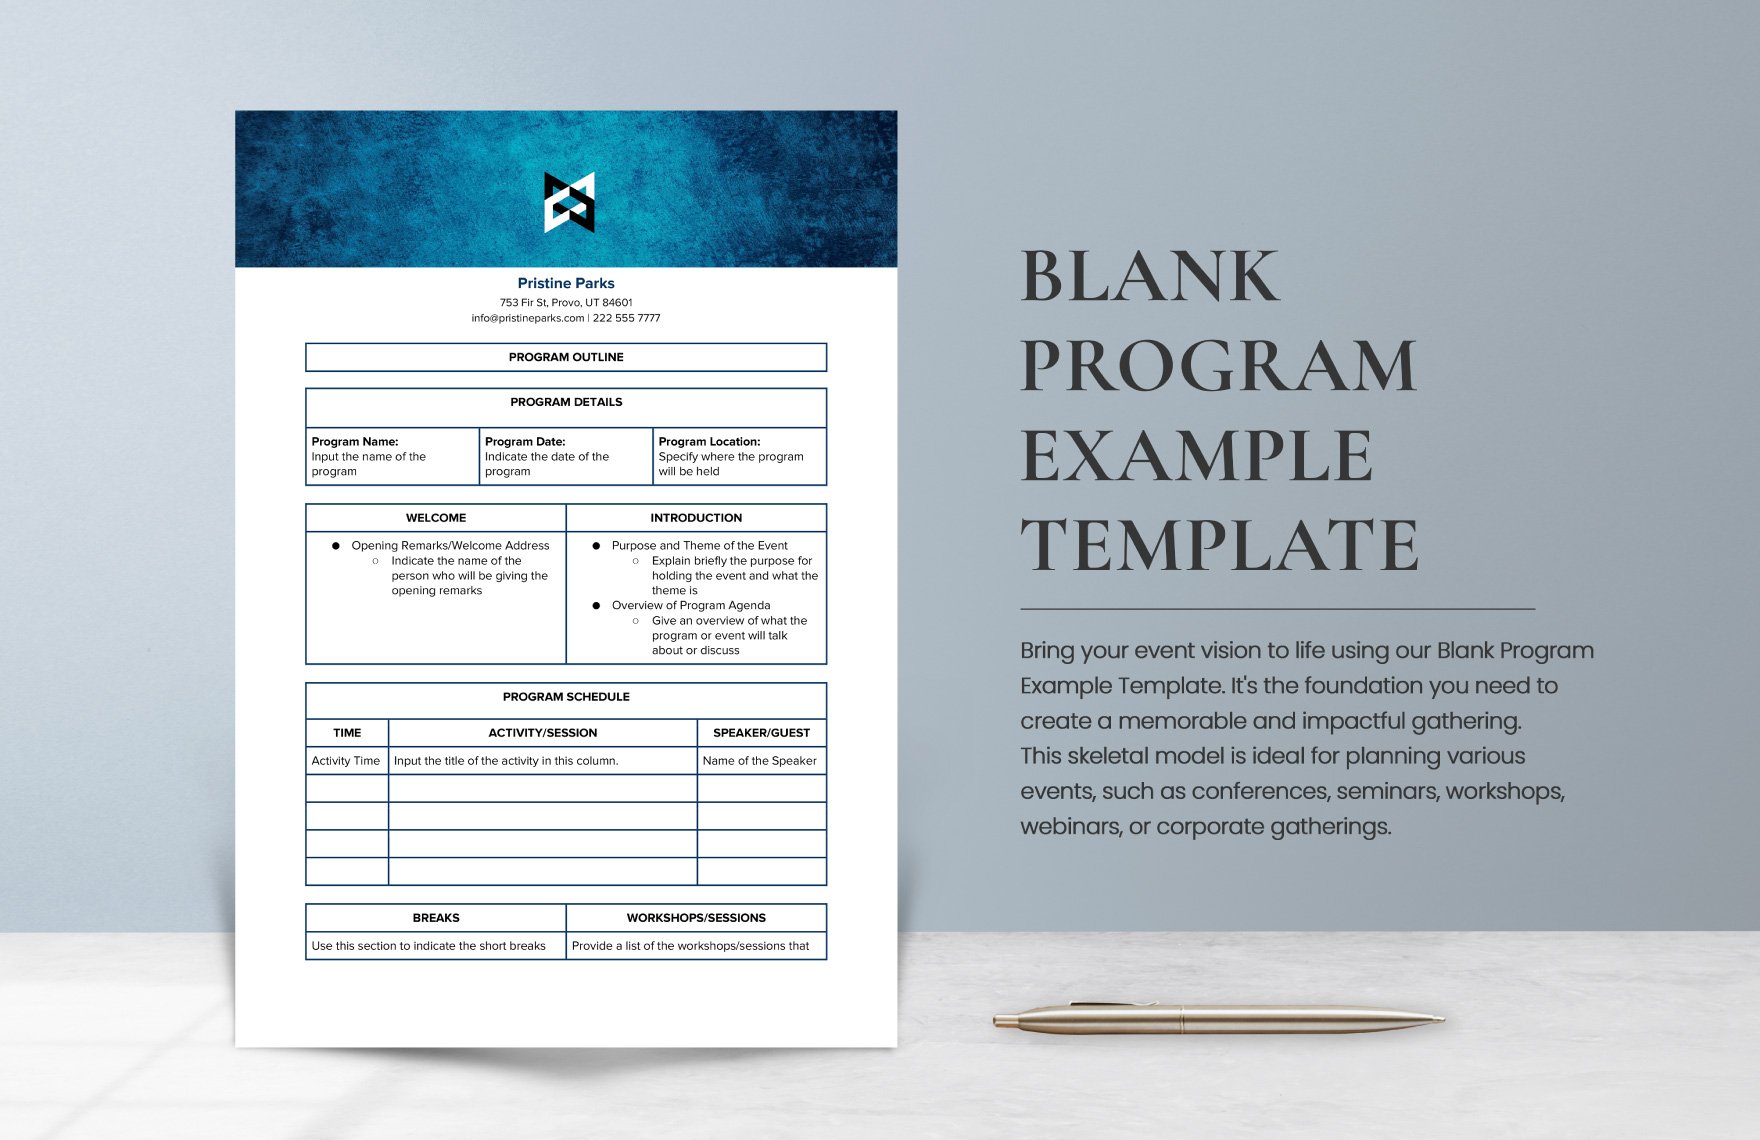 Blank Program Example Template